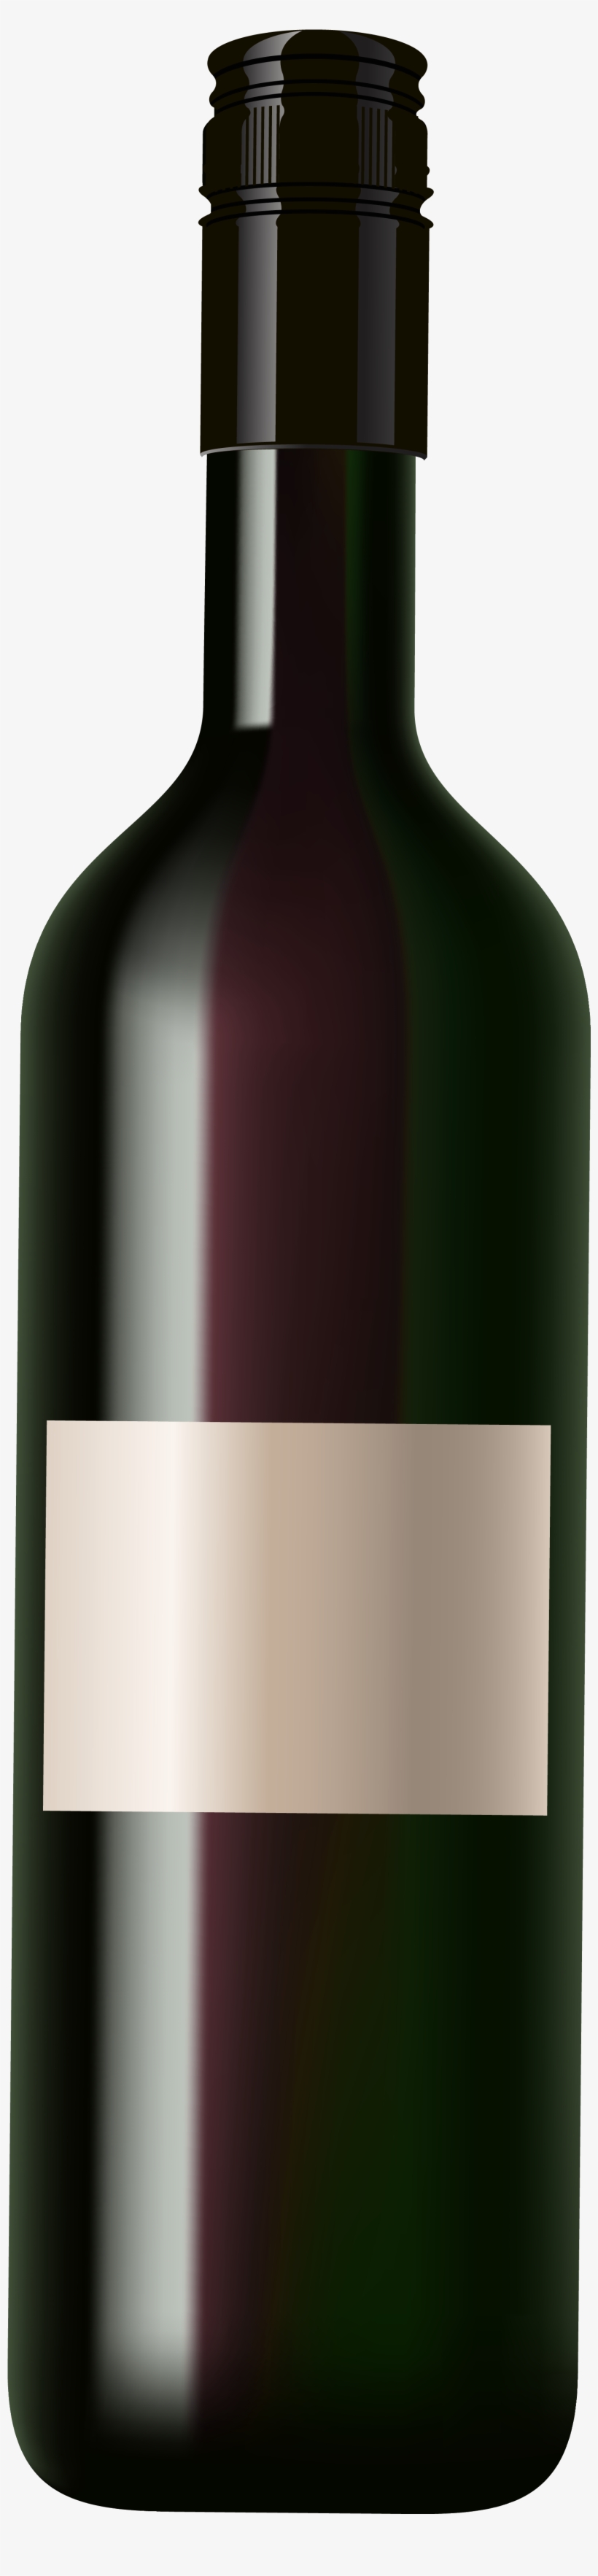 Empty Wine Bottle Png Download - Wine Bottle Clip Art Png, transparent png #709317